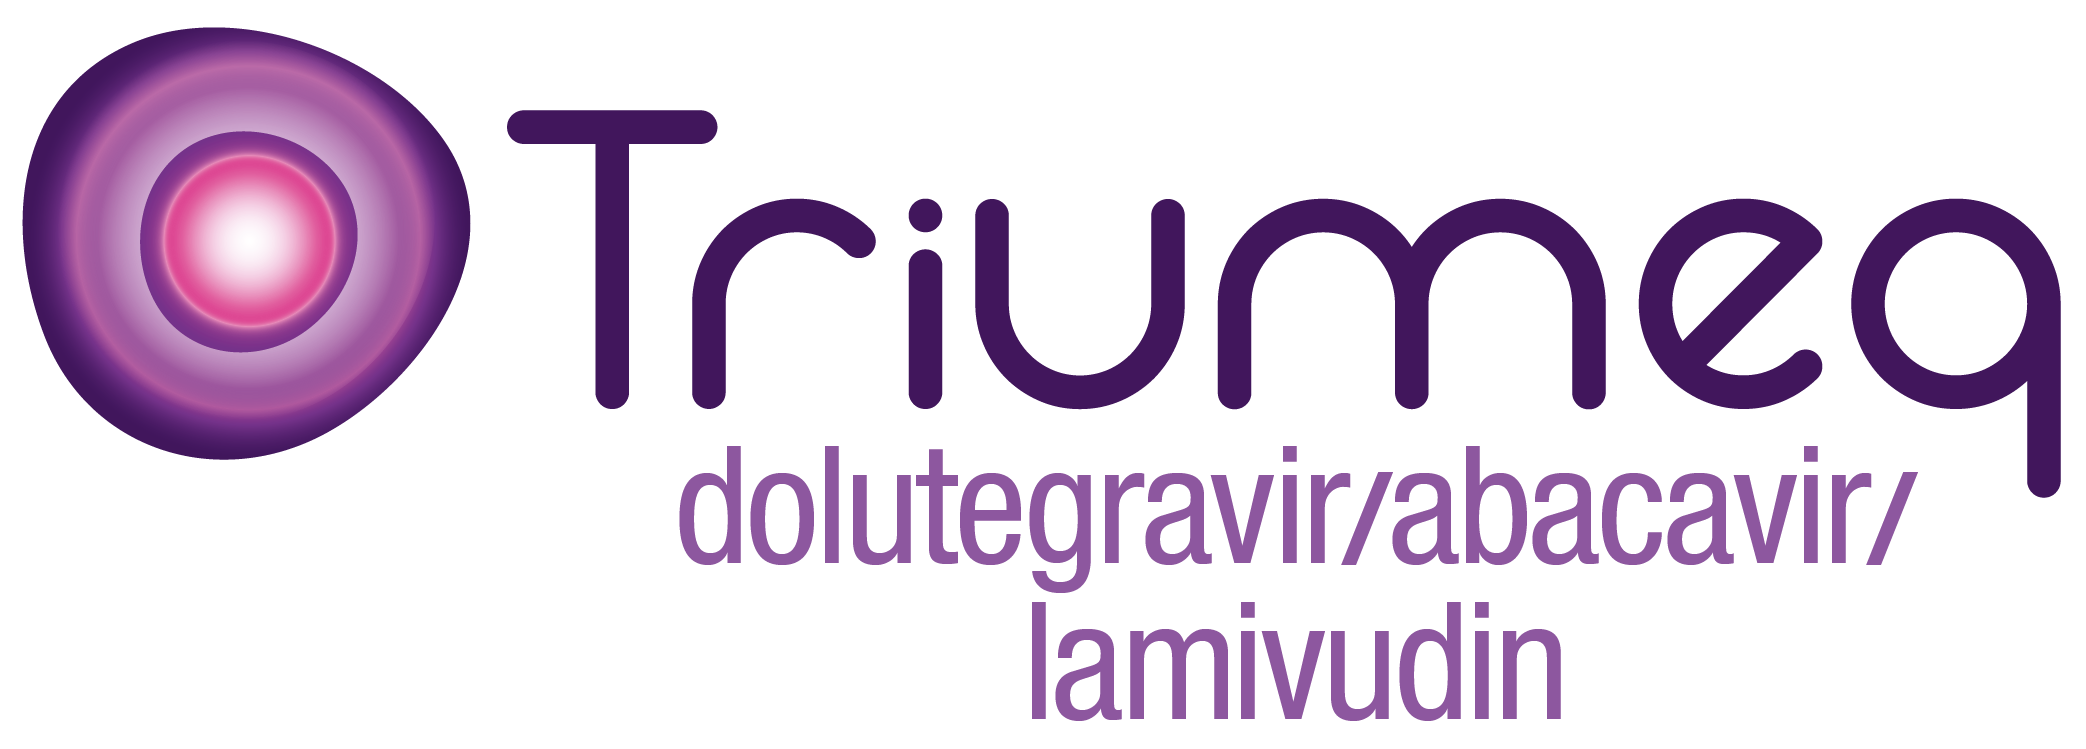 Triumeq logo